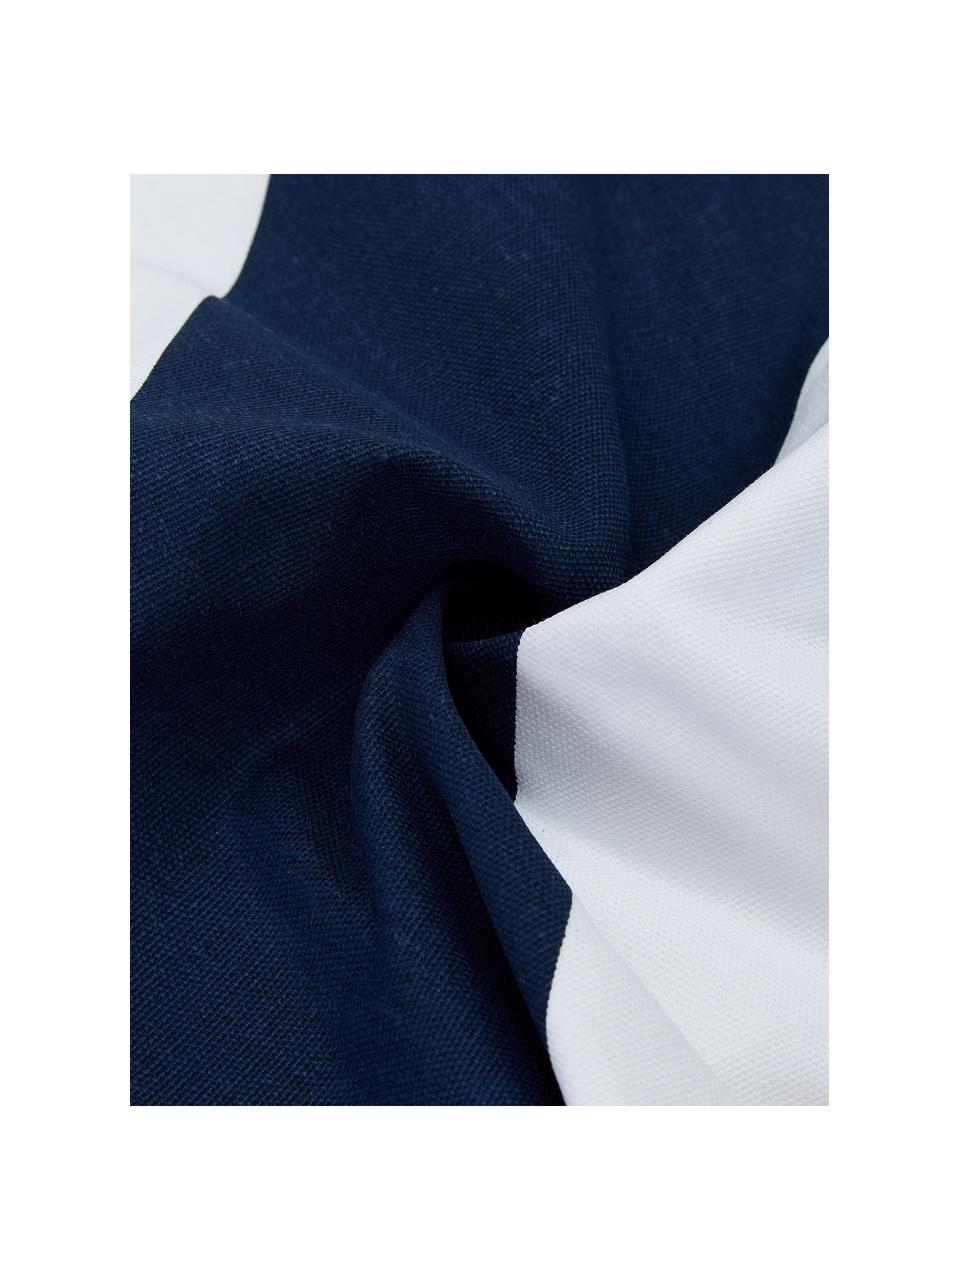 Gestreepte kussenhoes Ren in donkerblauw/wit, 100% katoen, Wit, donkerblauw, B 30 x L 50 cm